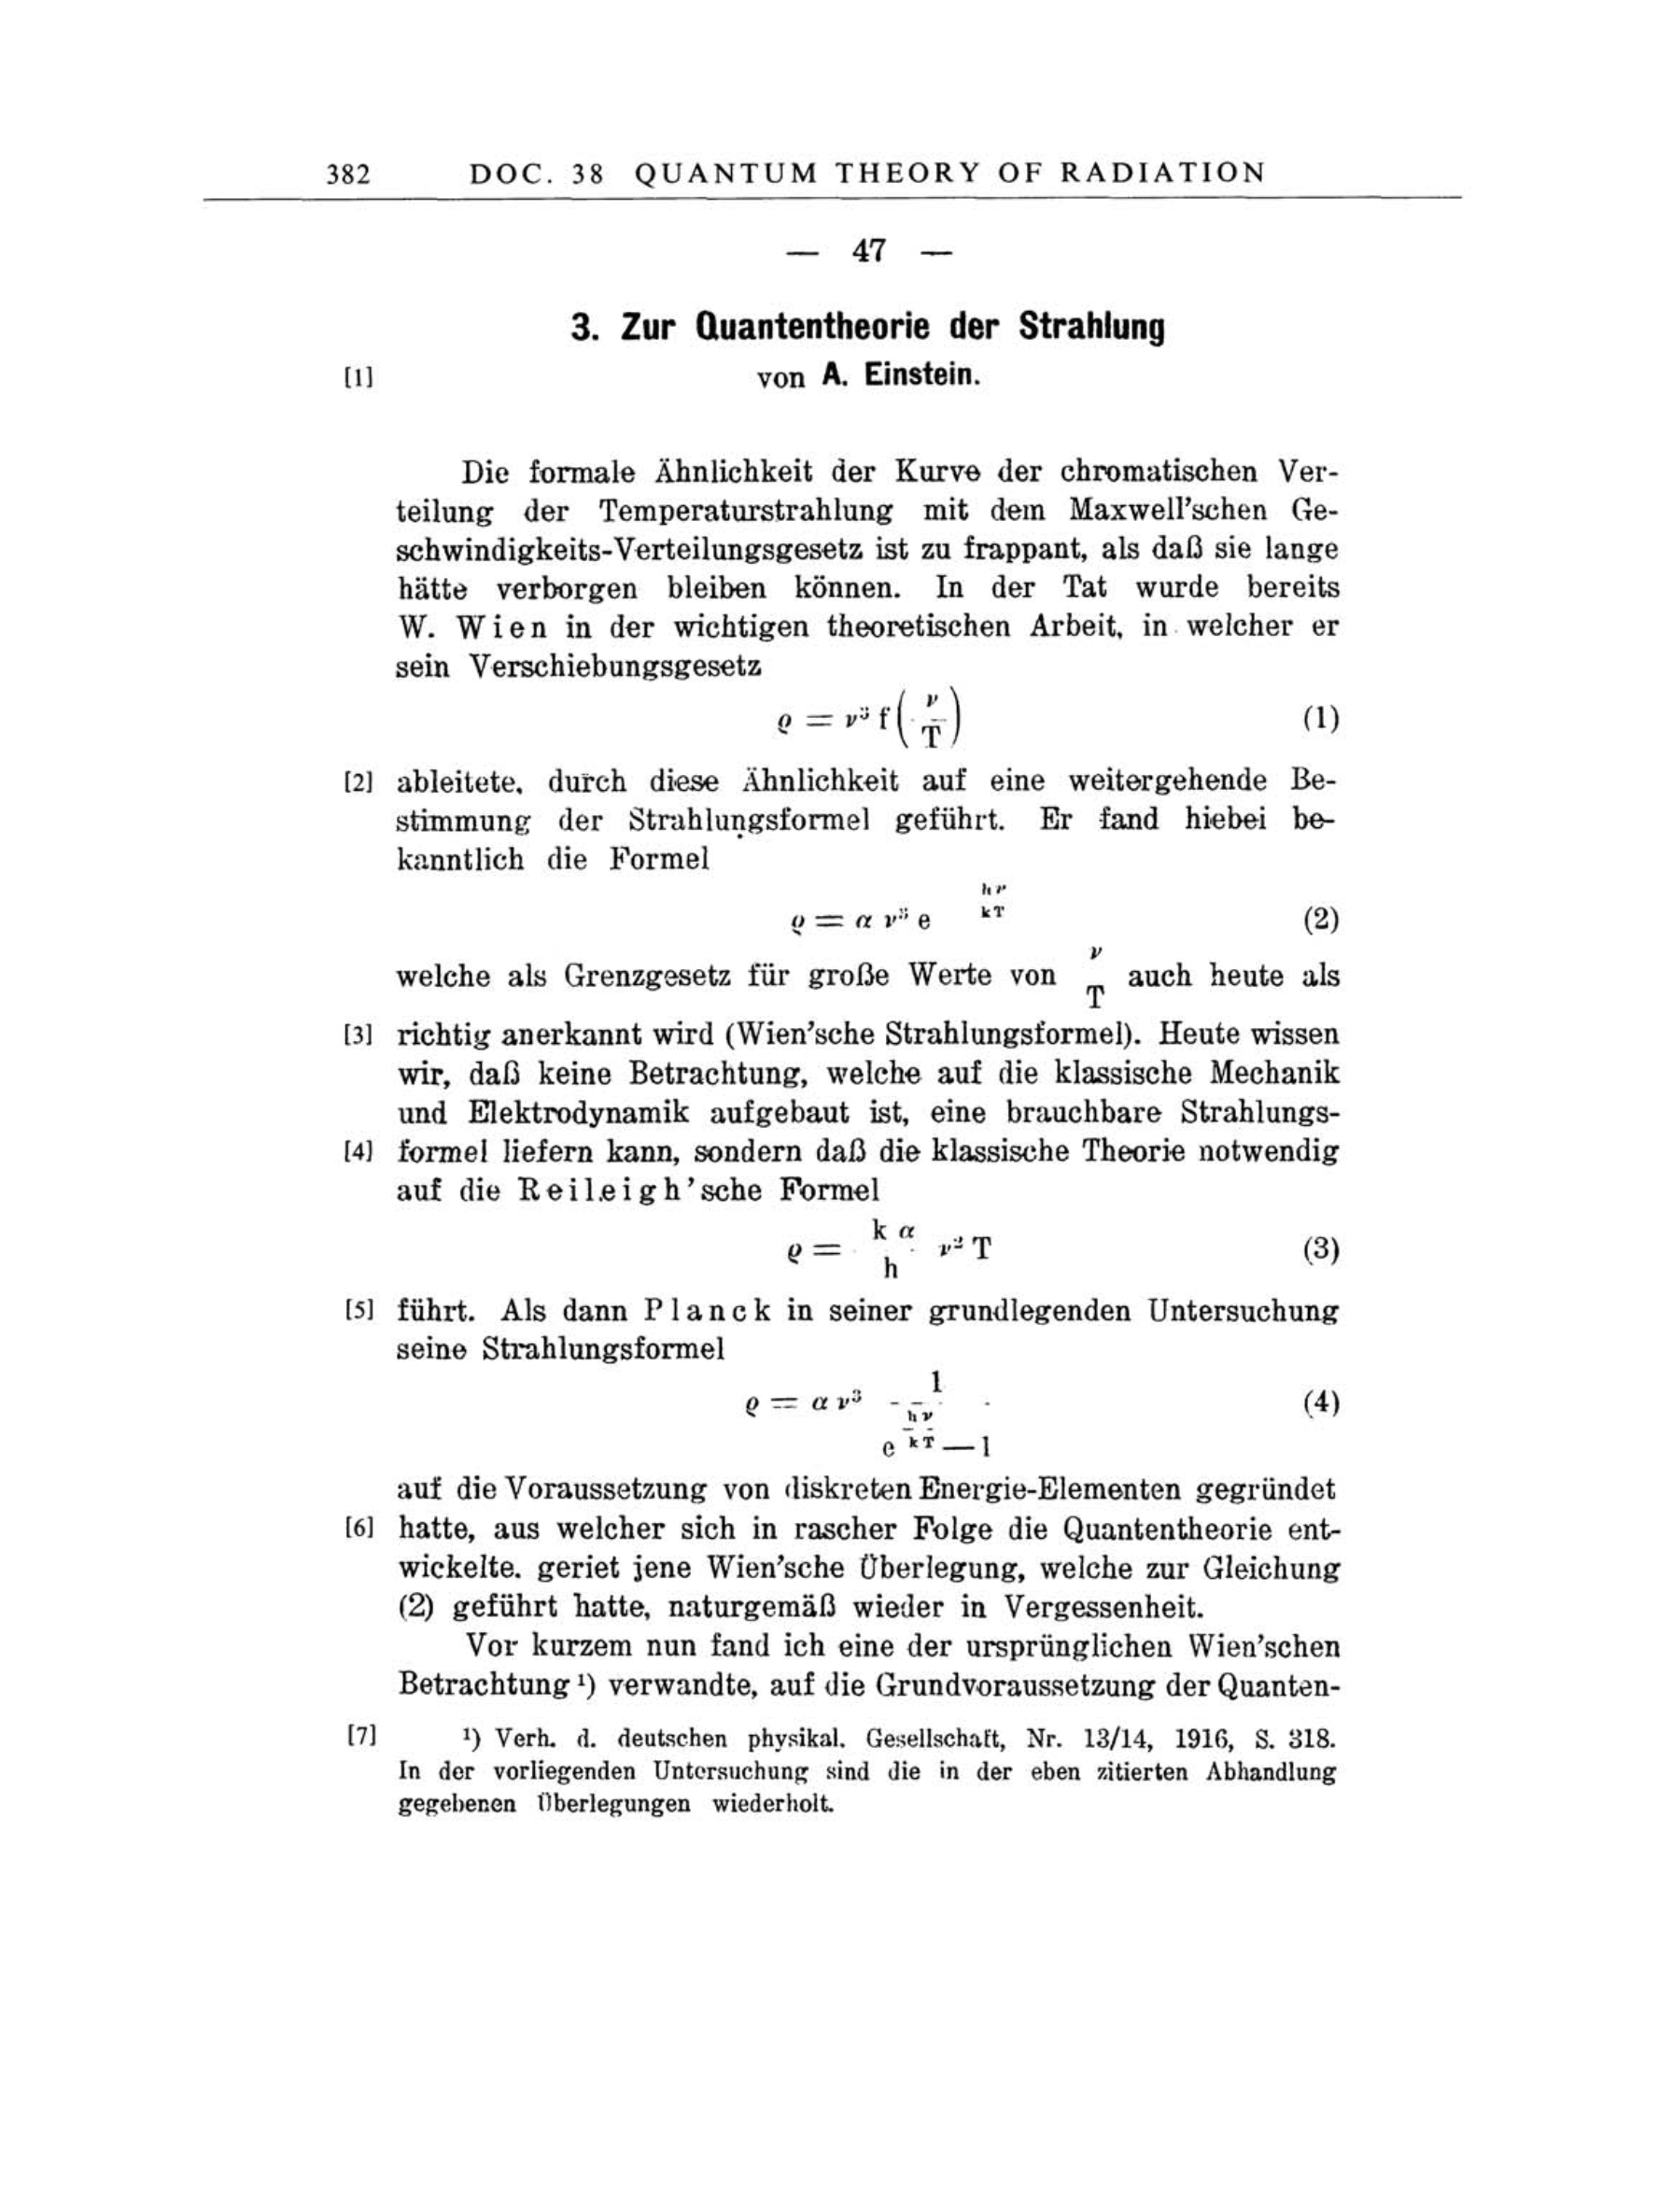 Volume 6: The Berlin Years: Writings, 1914-1917 page 382